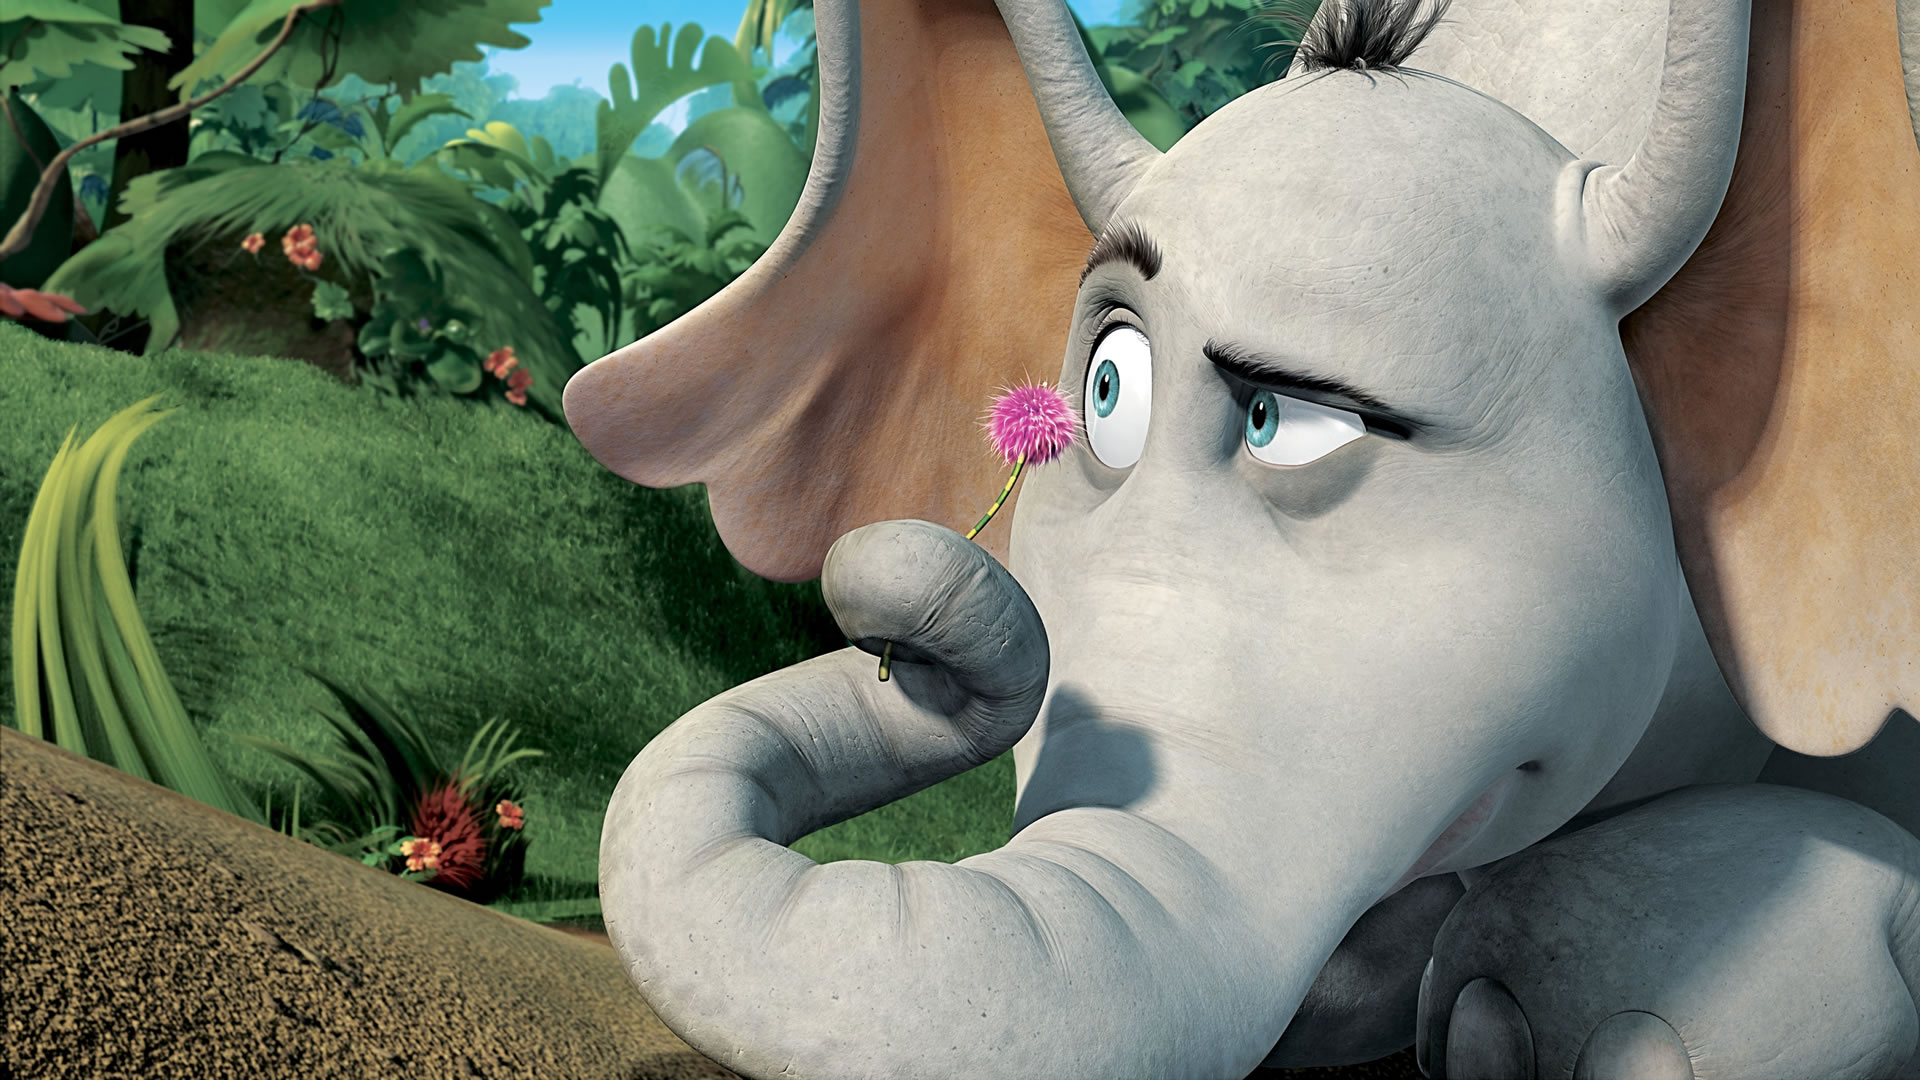 download wallpaper: Horton hears a Who wallpaper